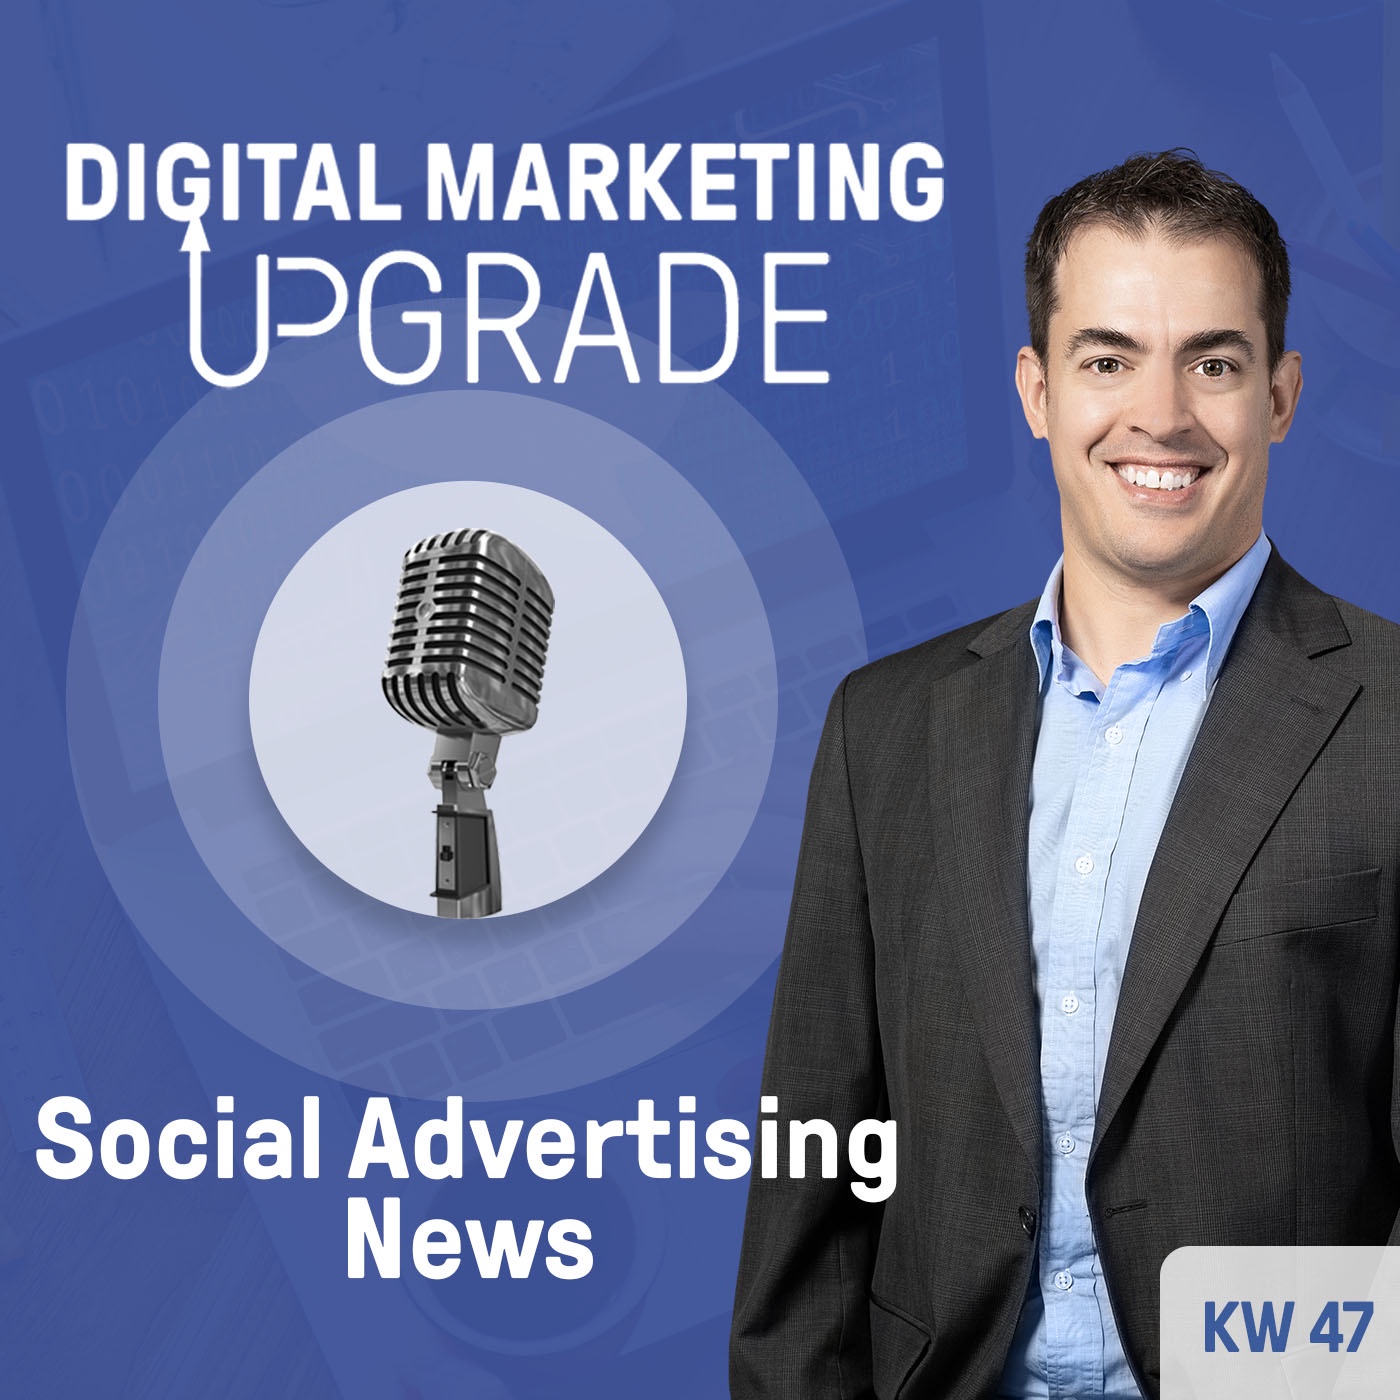 Social Advertising News - KW 47/23